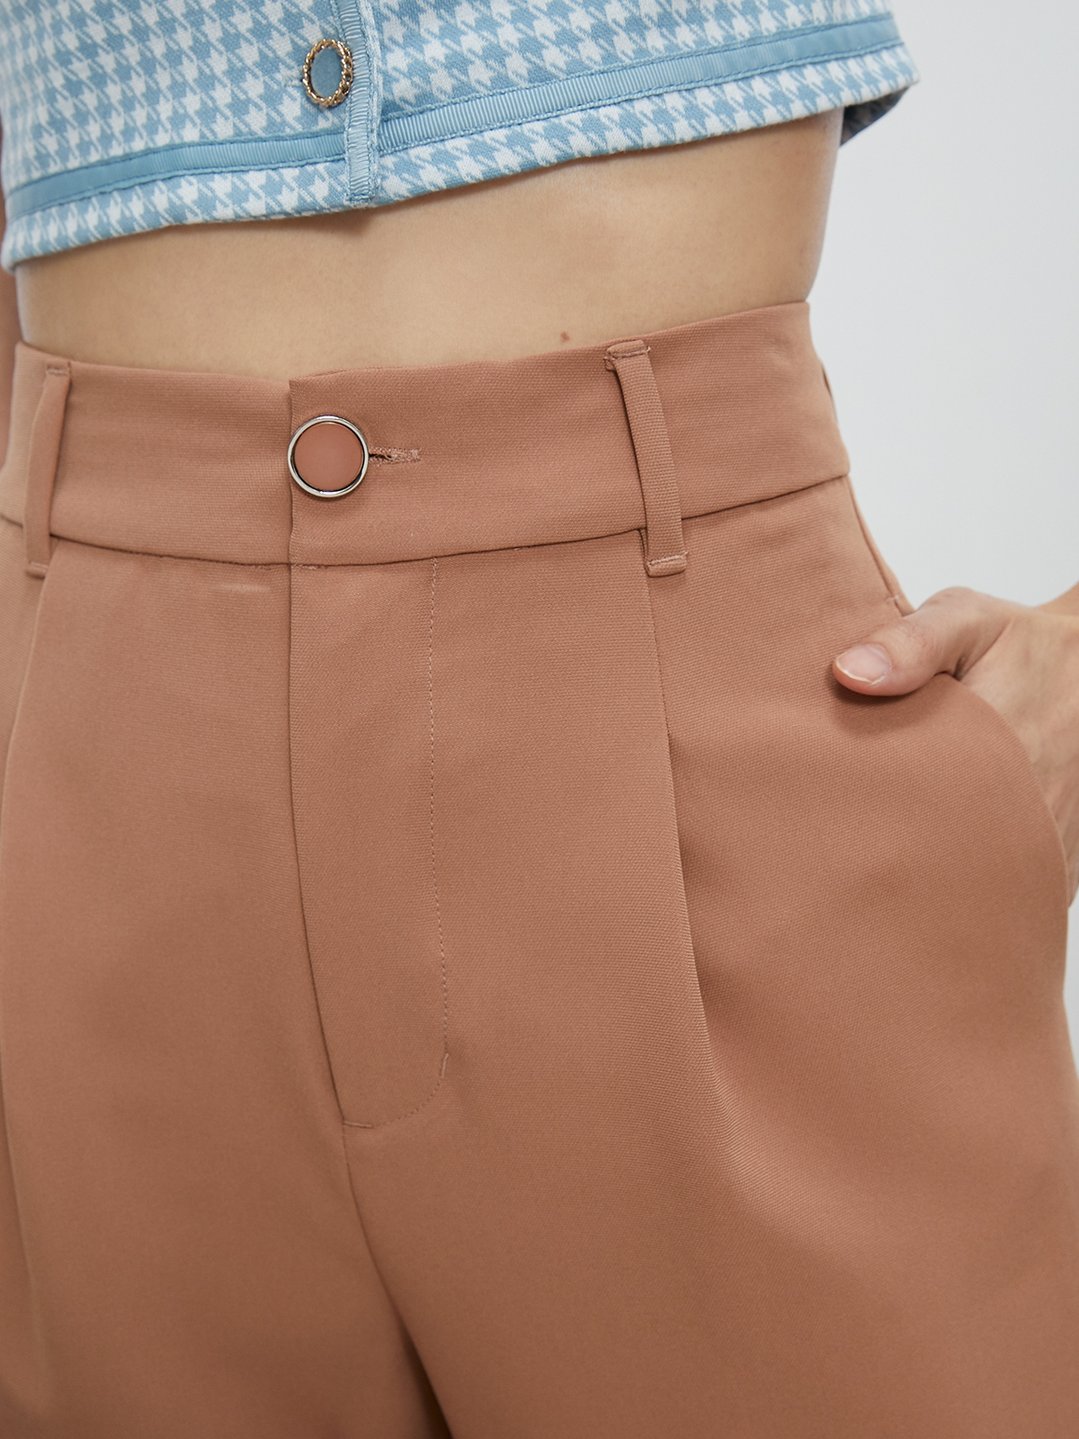 High Waist Trousers - Brown - Pomelo Fashion